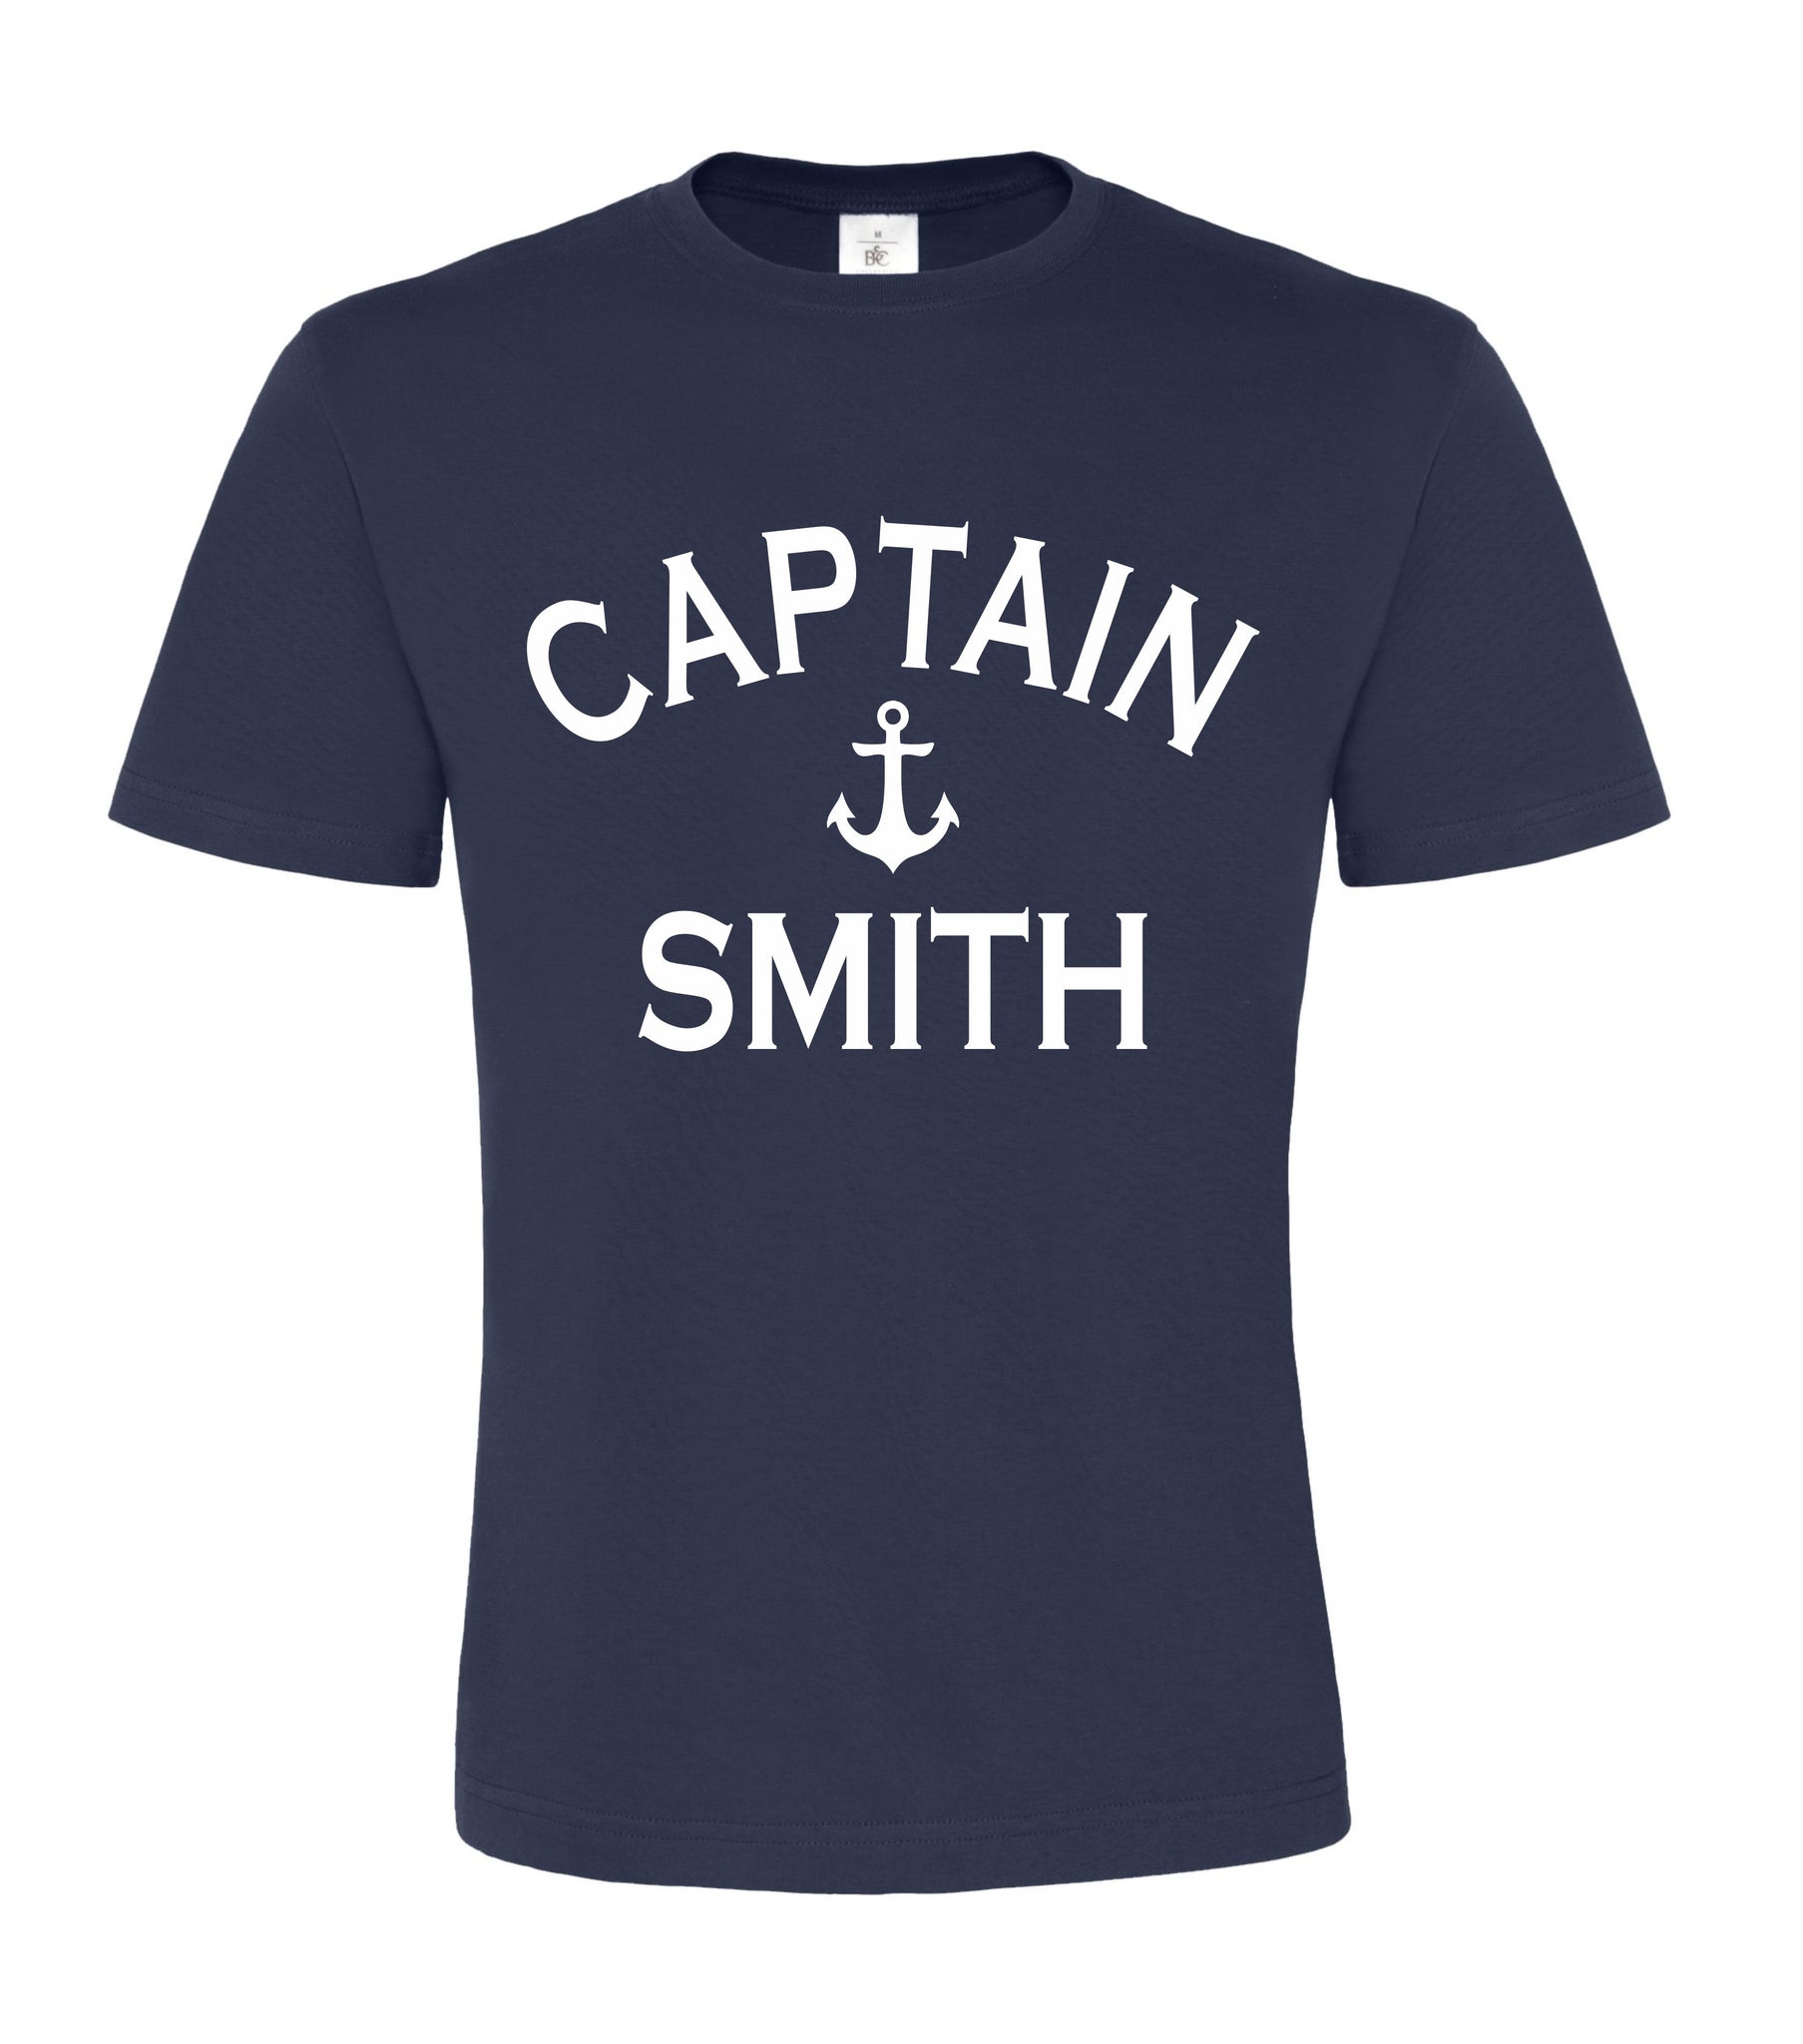 Personalised Captain Unisex T Shirt